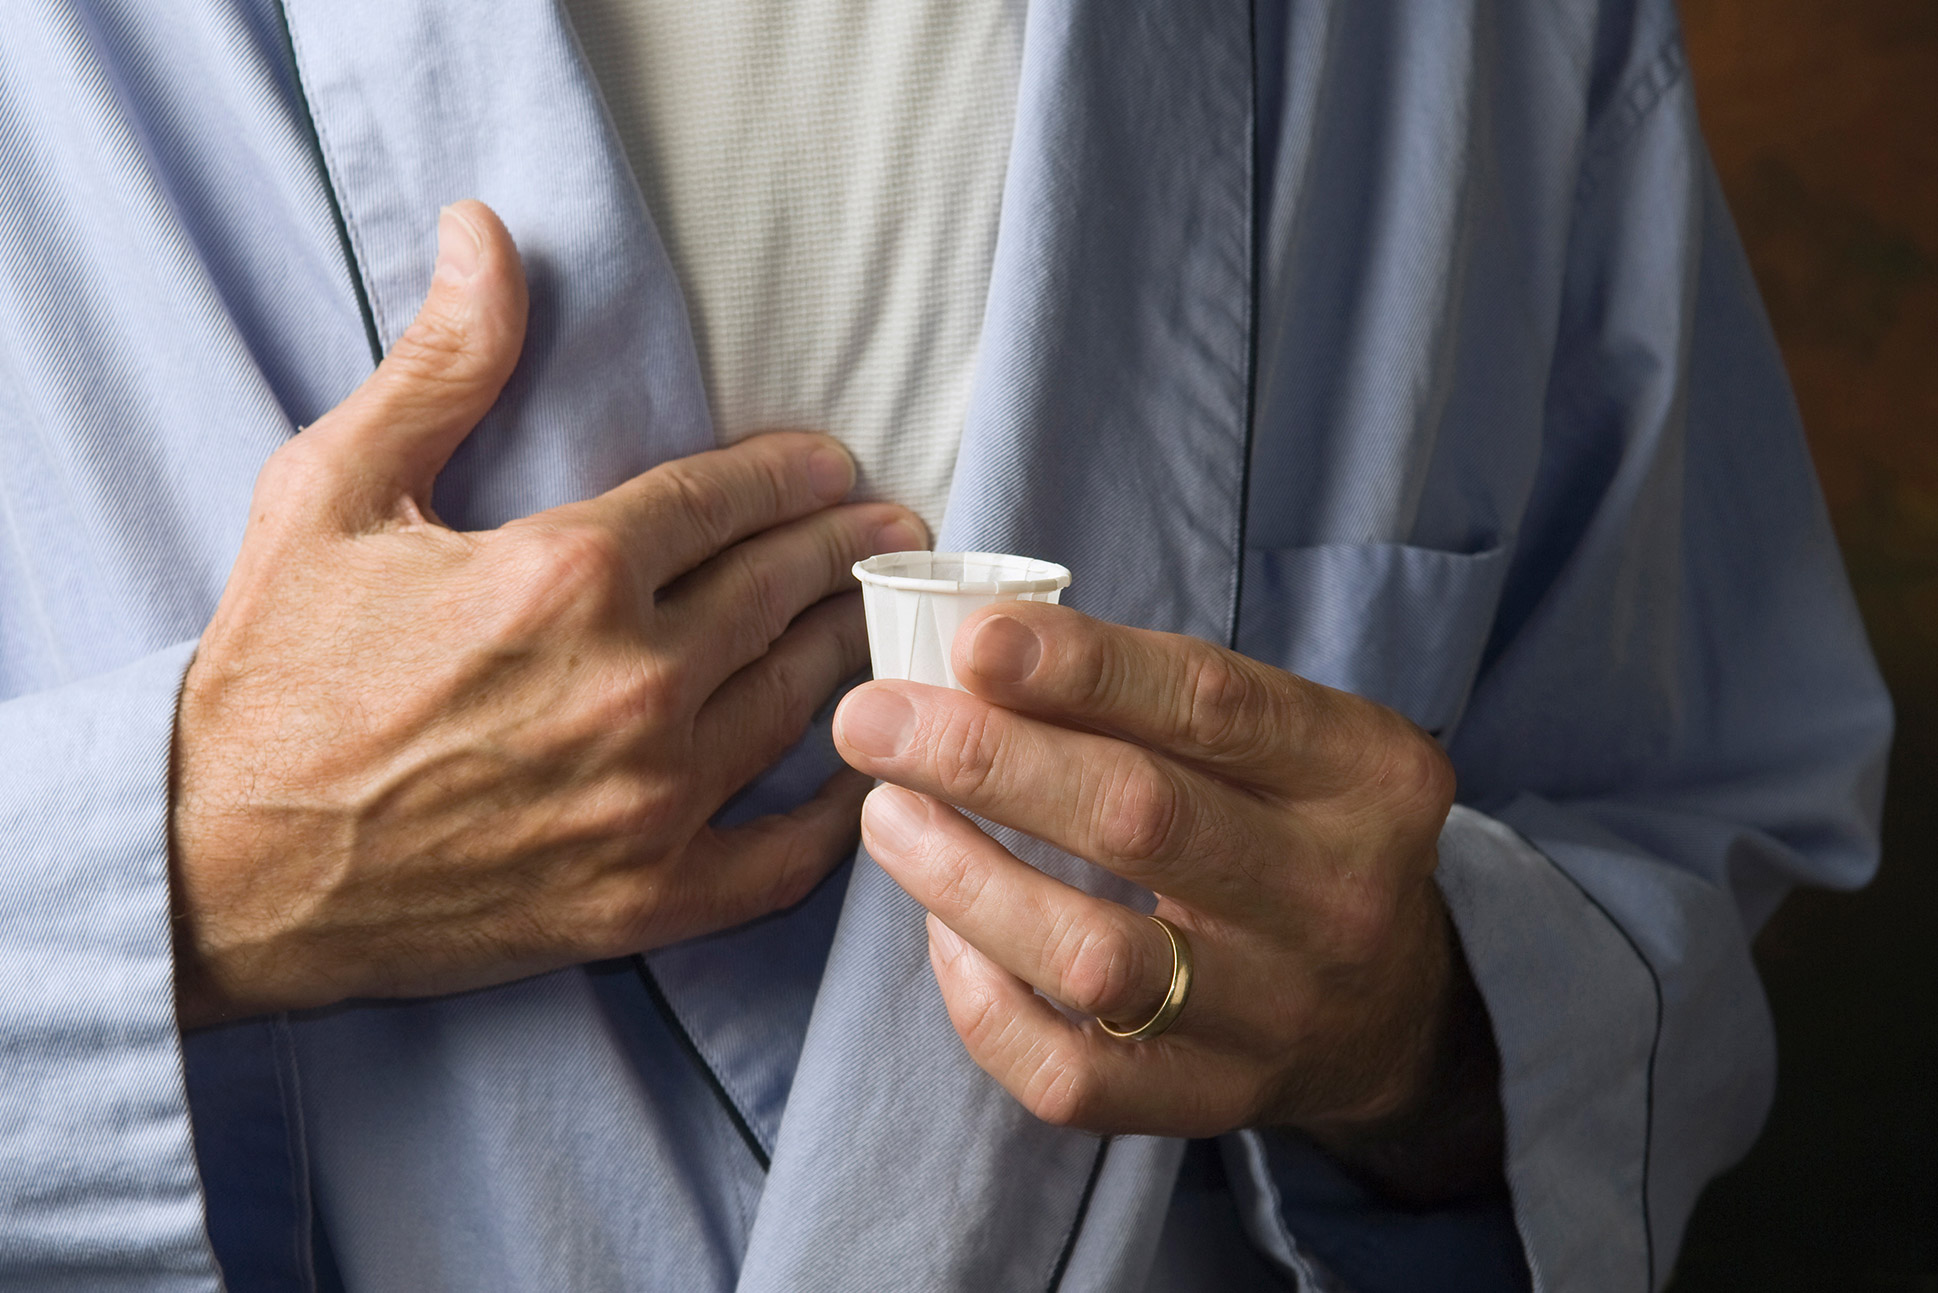 Proton Pump Inhibitors: Do Heartburn Drugs Increase Your Risk of Dementia?